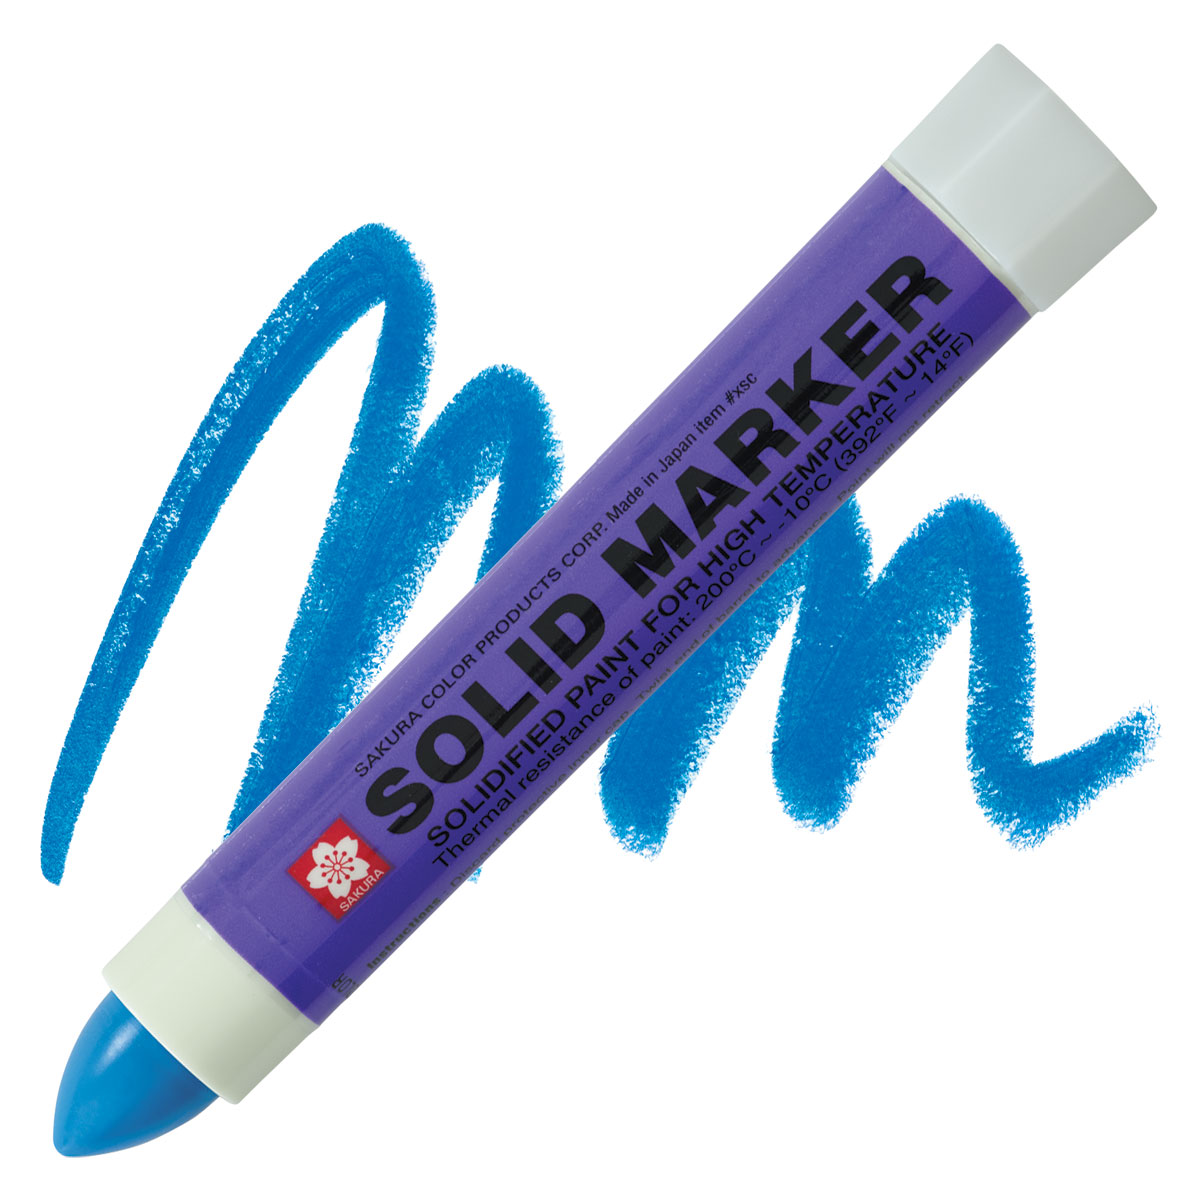 Sakura Solid Paint Marker, Bullet Tip, Yellow, Dozen